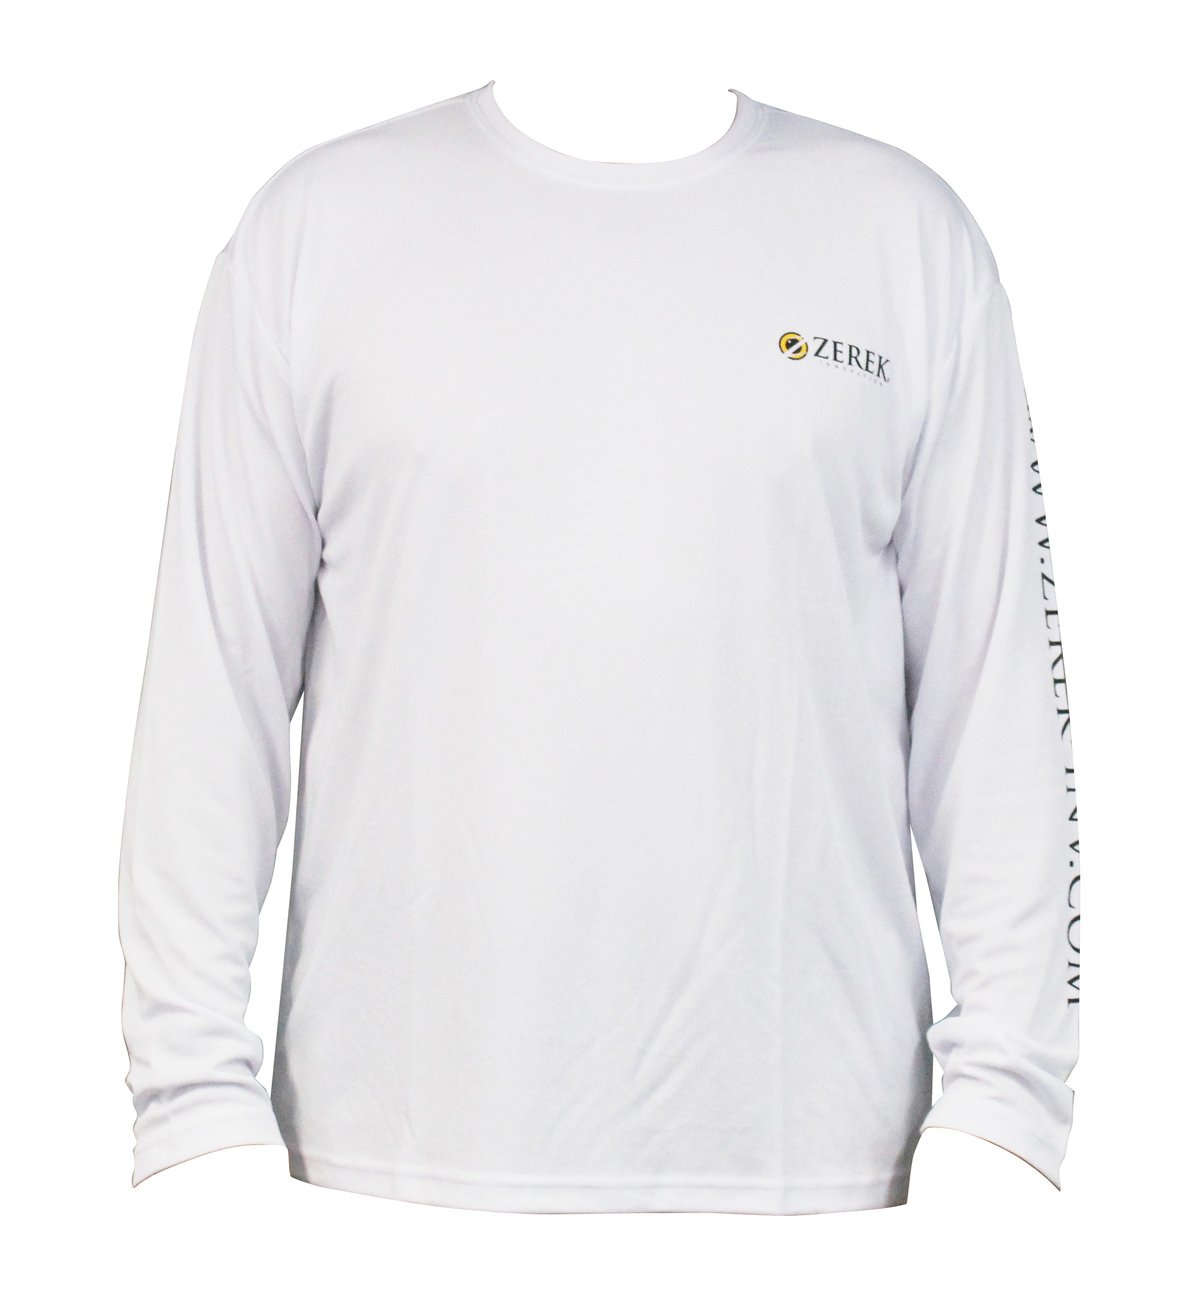 Zerek White Dry Fit Long Sleeve Fishing Shirt-UPF 25+ Long Sleeve ...